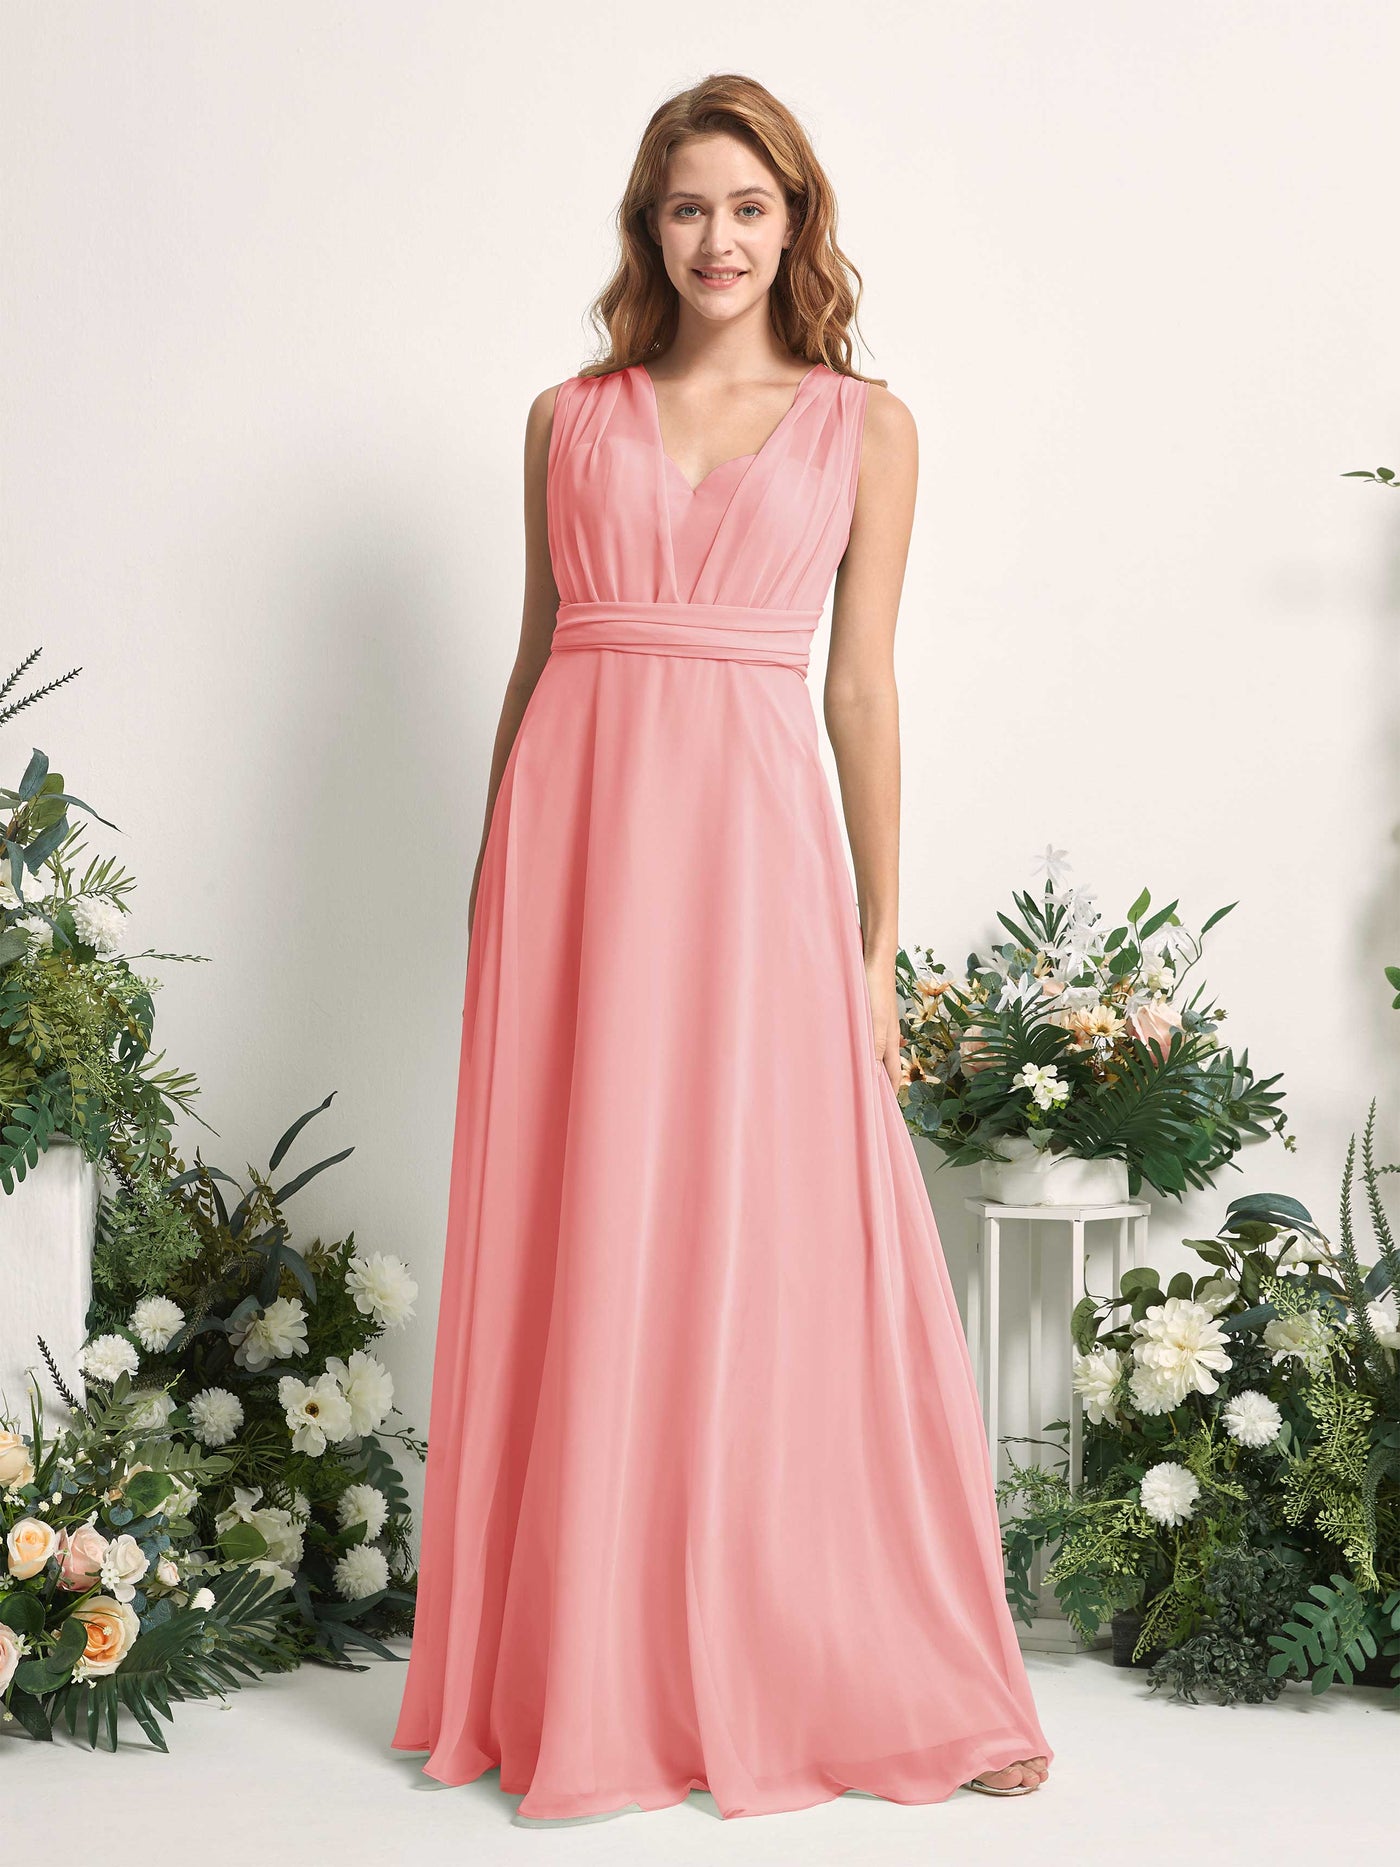 Ballet Pink Bridesmaid Dresses Bridesmaid Dress A-line Chiffon Halter Full Length Short Sleeves Wedding Party Dress (81226340)#color_ballet-pink